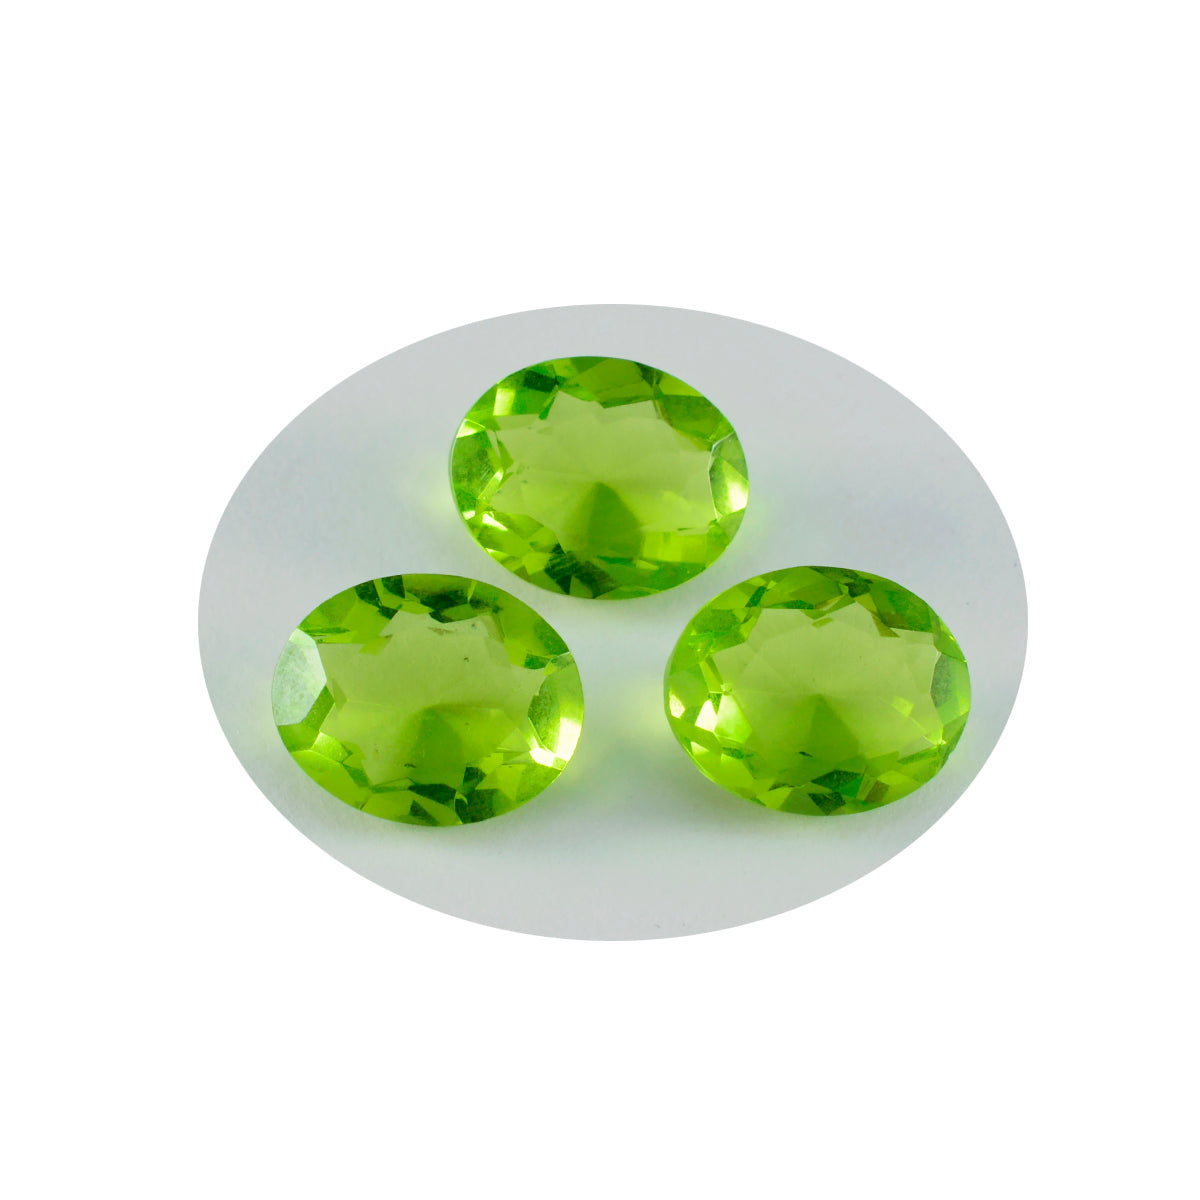 riyogems 1 st grön peridot cz fasetterad 9x11 mm oval form vackra kvalitetsädelstenar